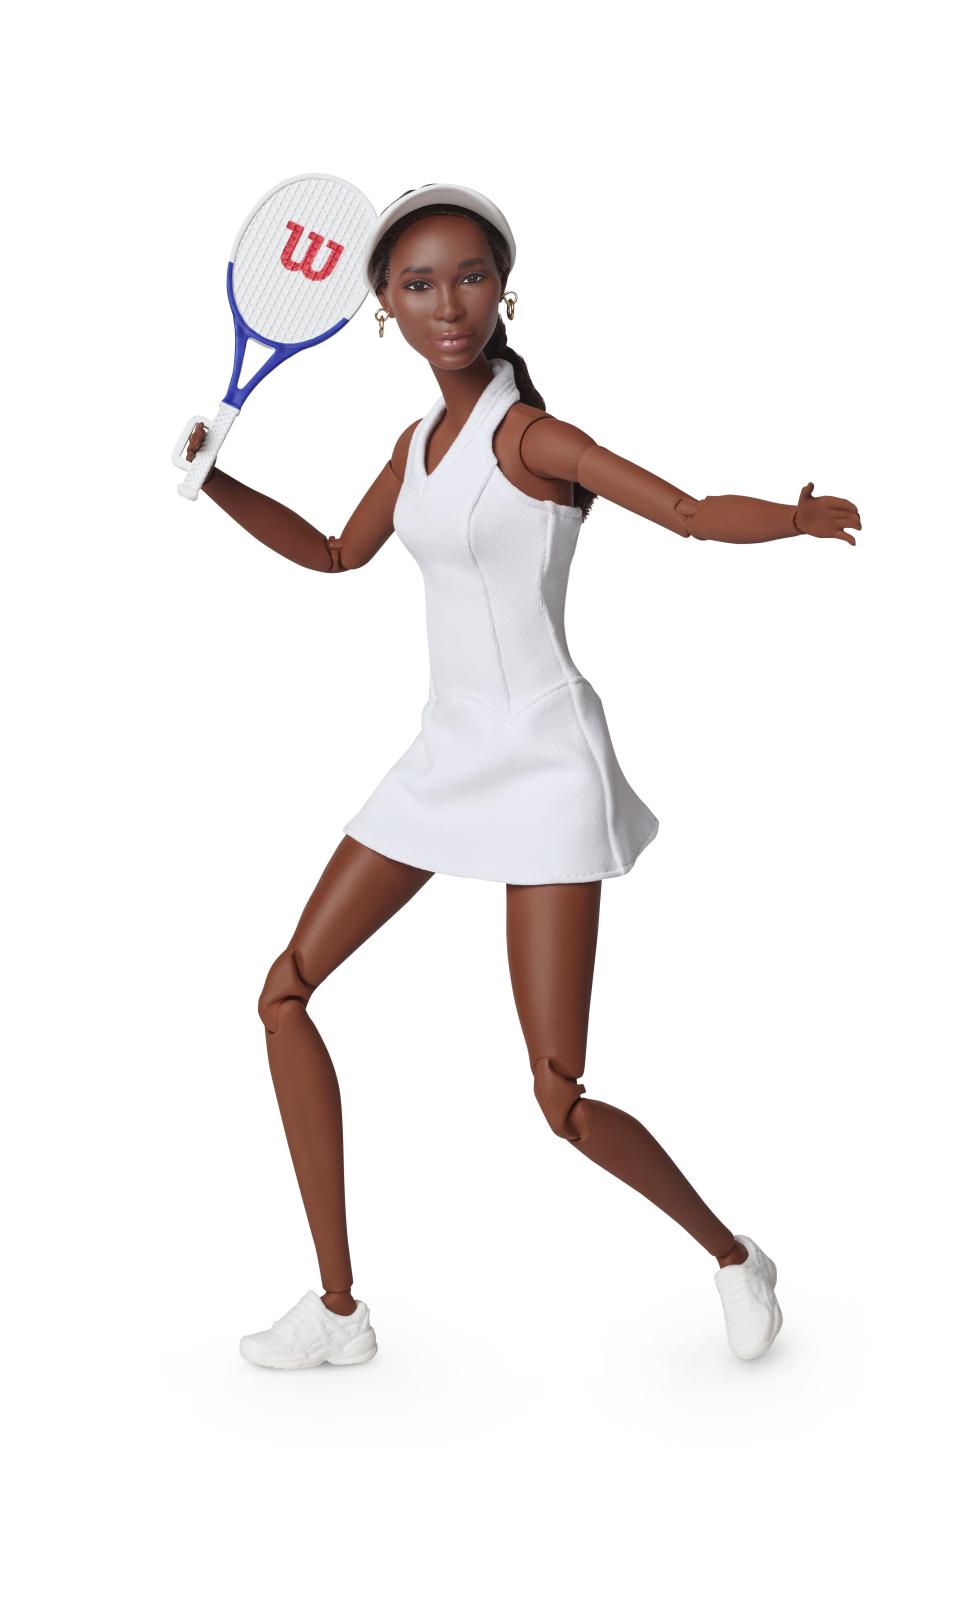 Venus Williams' one-of-a-kind Barbie doll, tennis, Wimbledon, athlete, Mattel